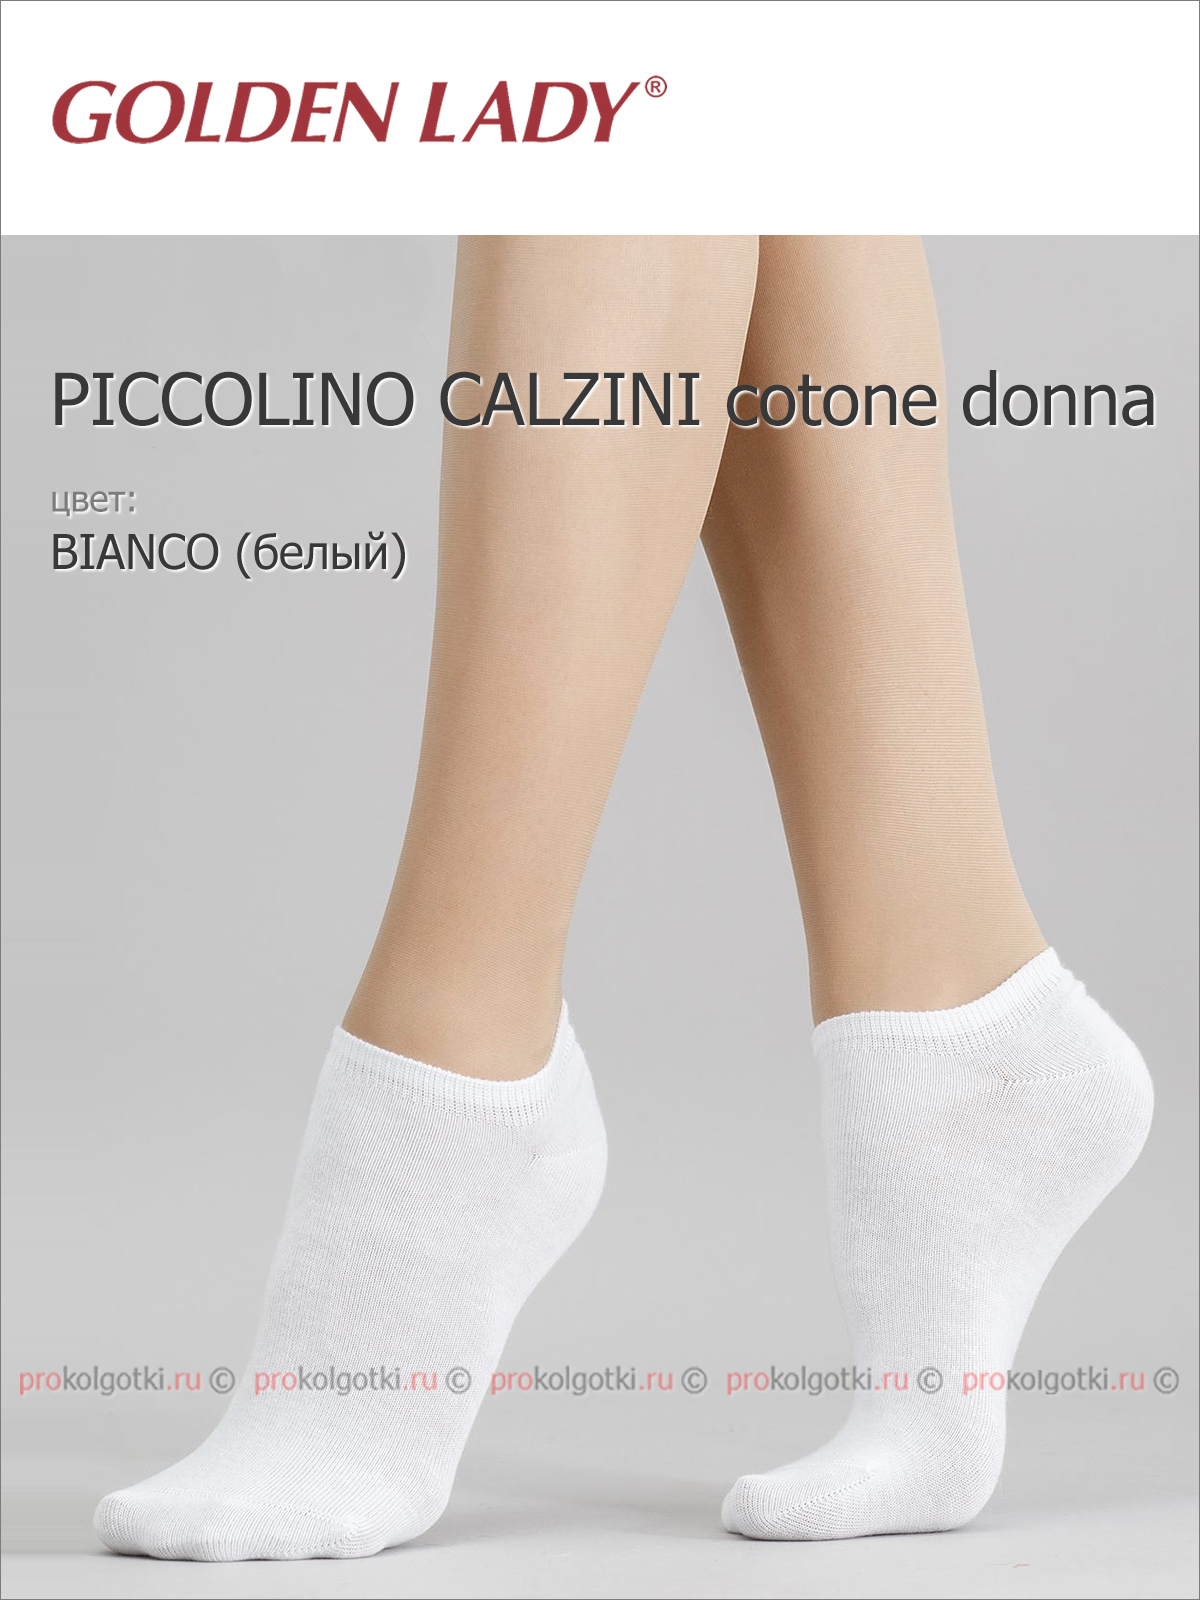 Носки Golden Lady Piccolino Calzini Cotone Donna - фото 1